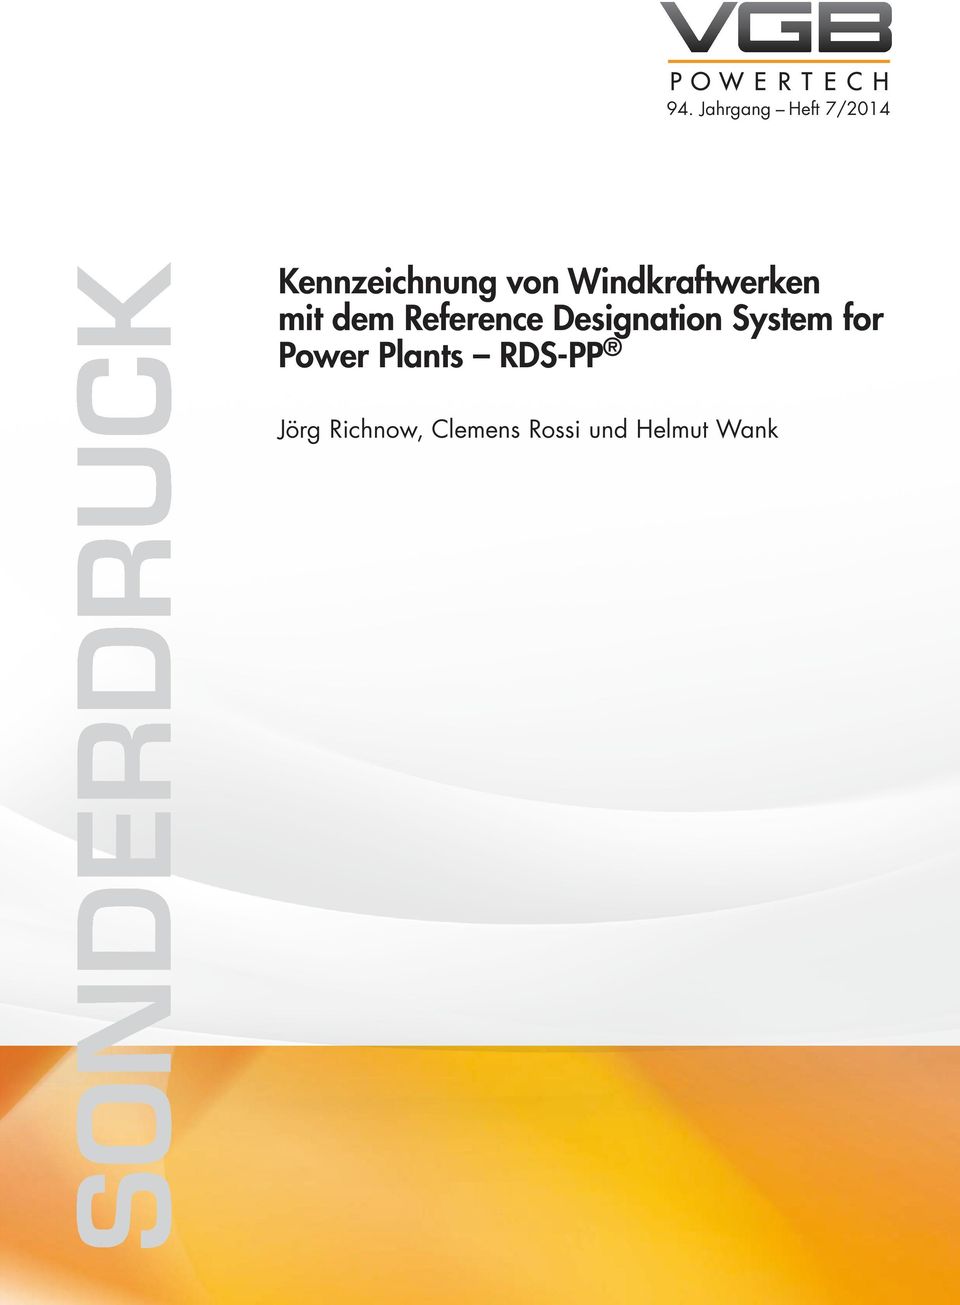 Designation System for Power Plants